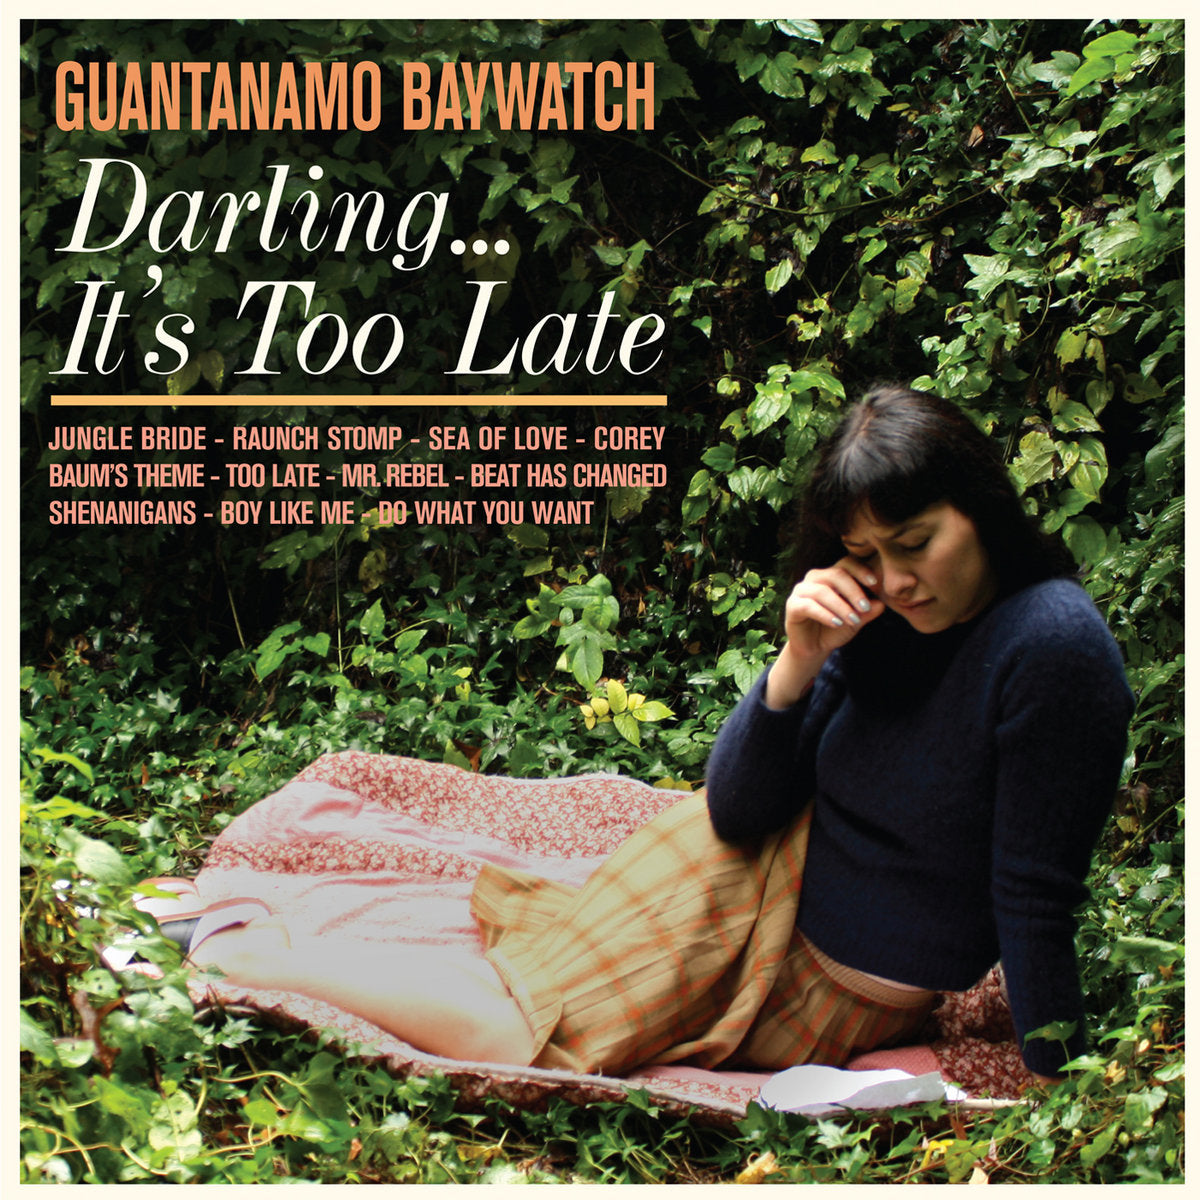 Guantanamo Baywatch "Darling... It's Too Late" LP (2015)